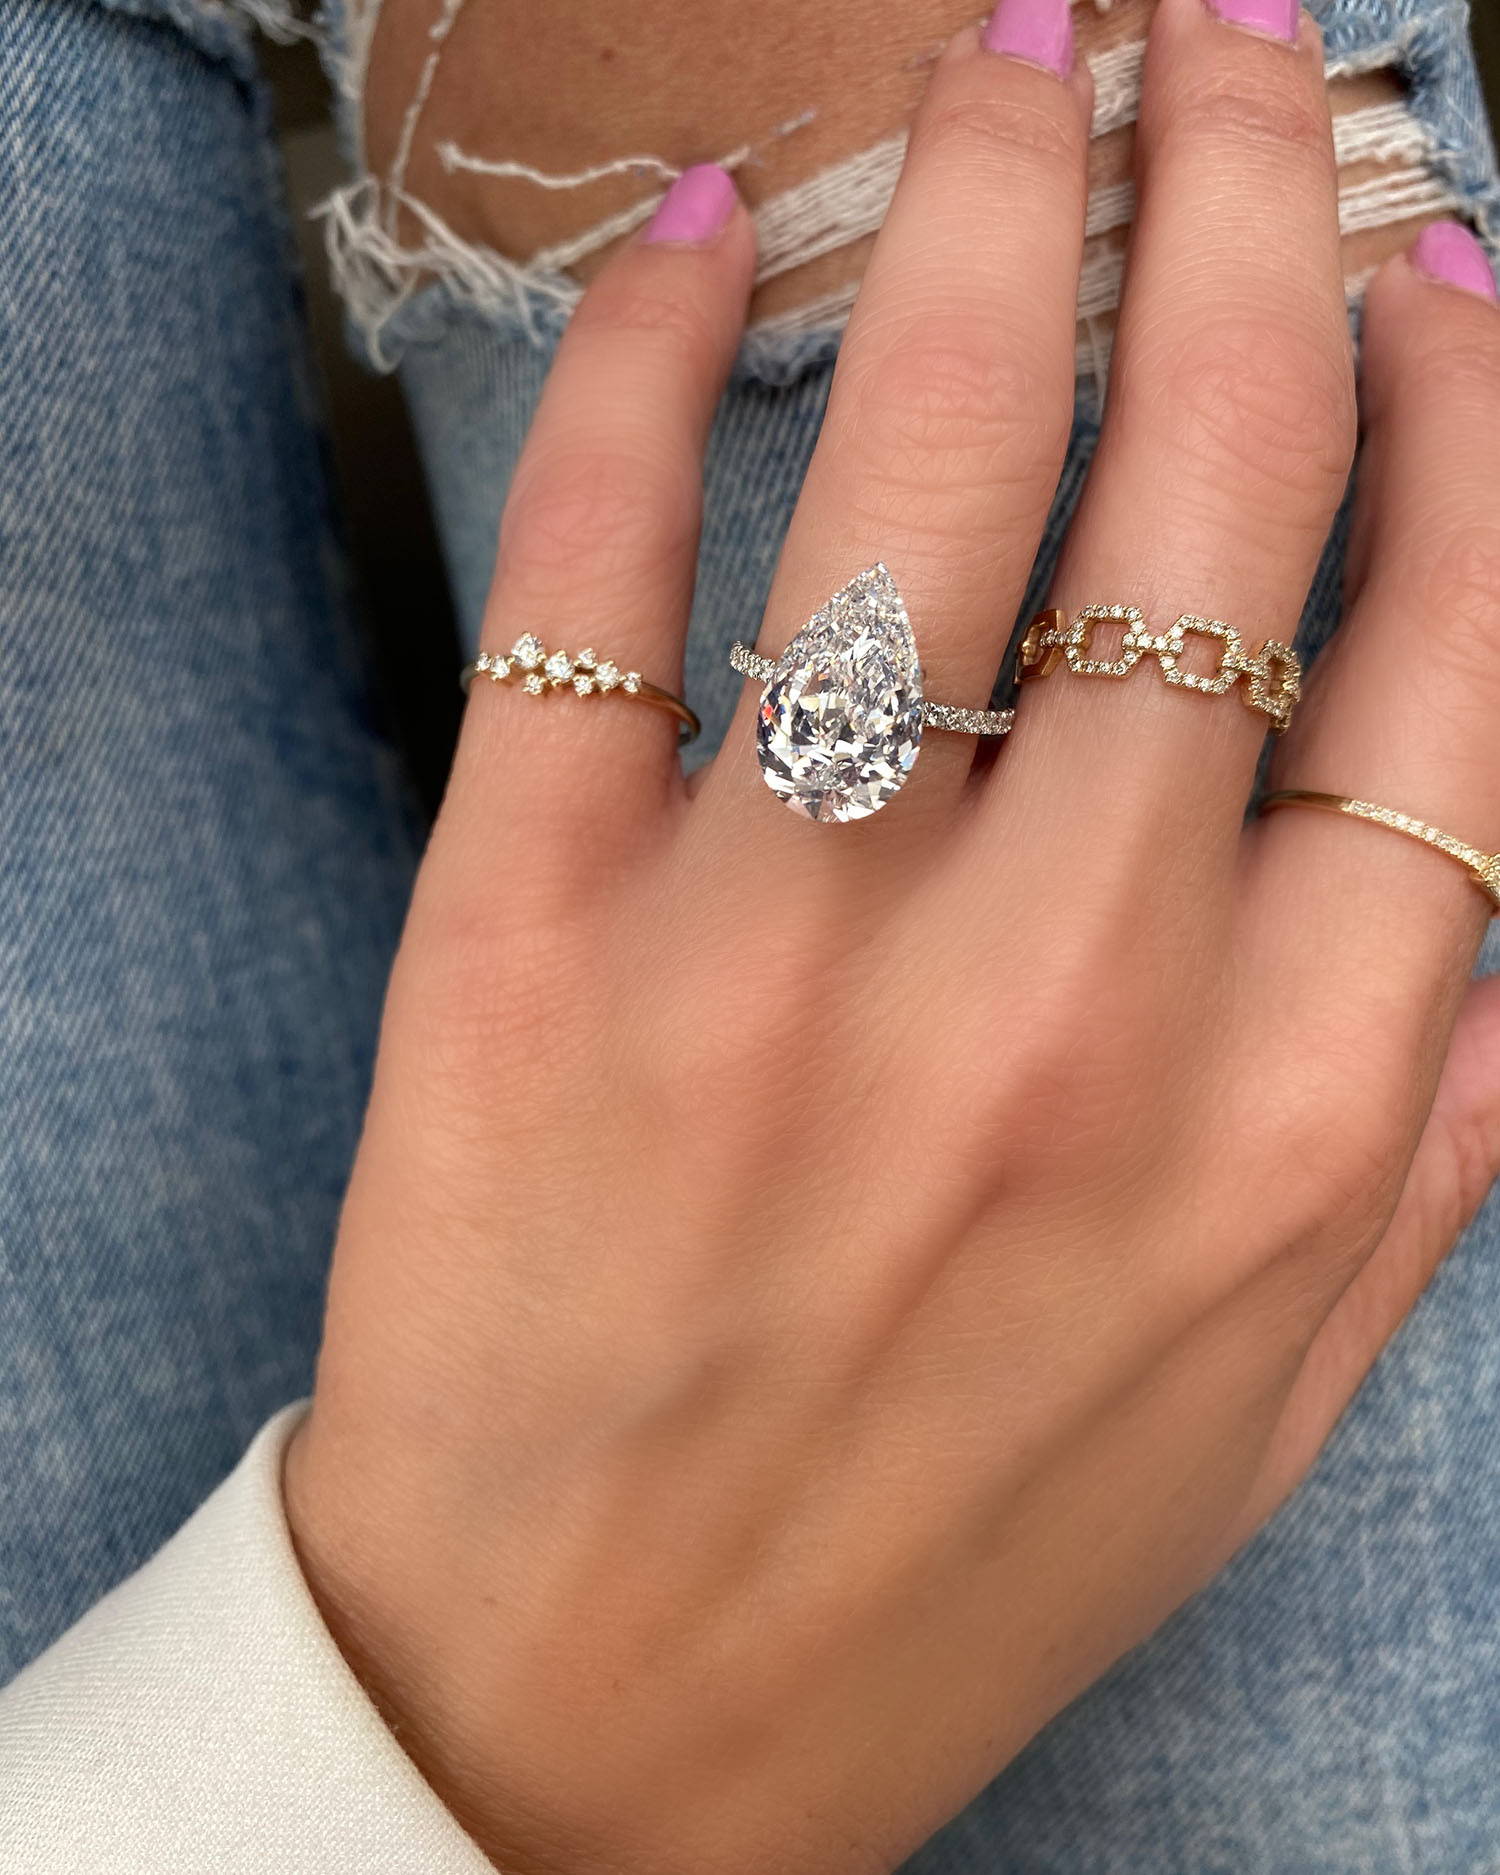 Miss Diamond Ring 5 Carat 6 Carat Pear Marquise Diamond Engagement Ring